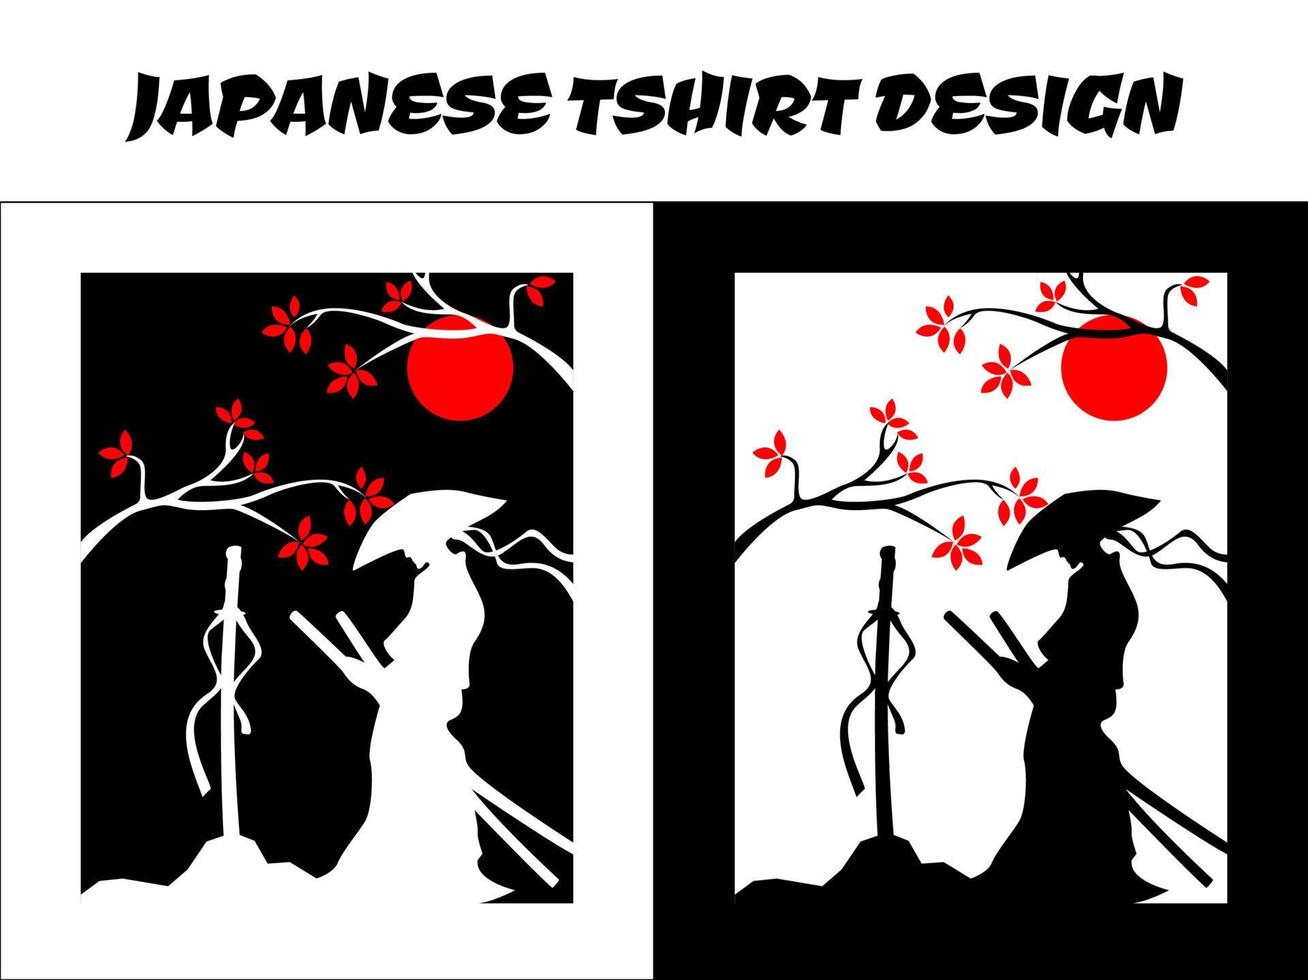 male samurai, silhouette japan samurai vector for design t shirt concept, silhouette samurai, Japanese t-shirt design, samurai vector illustration